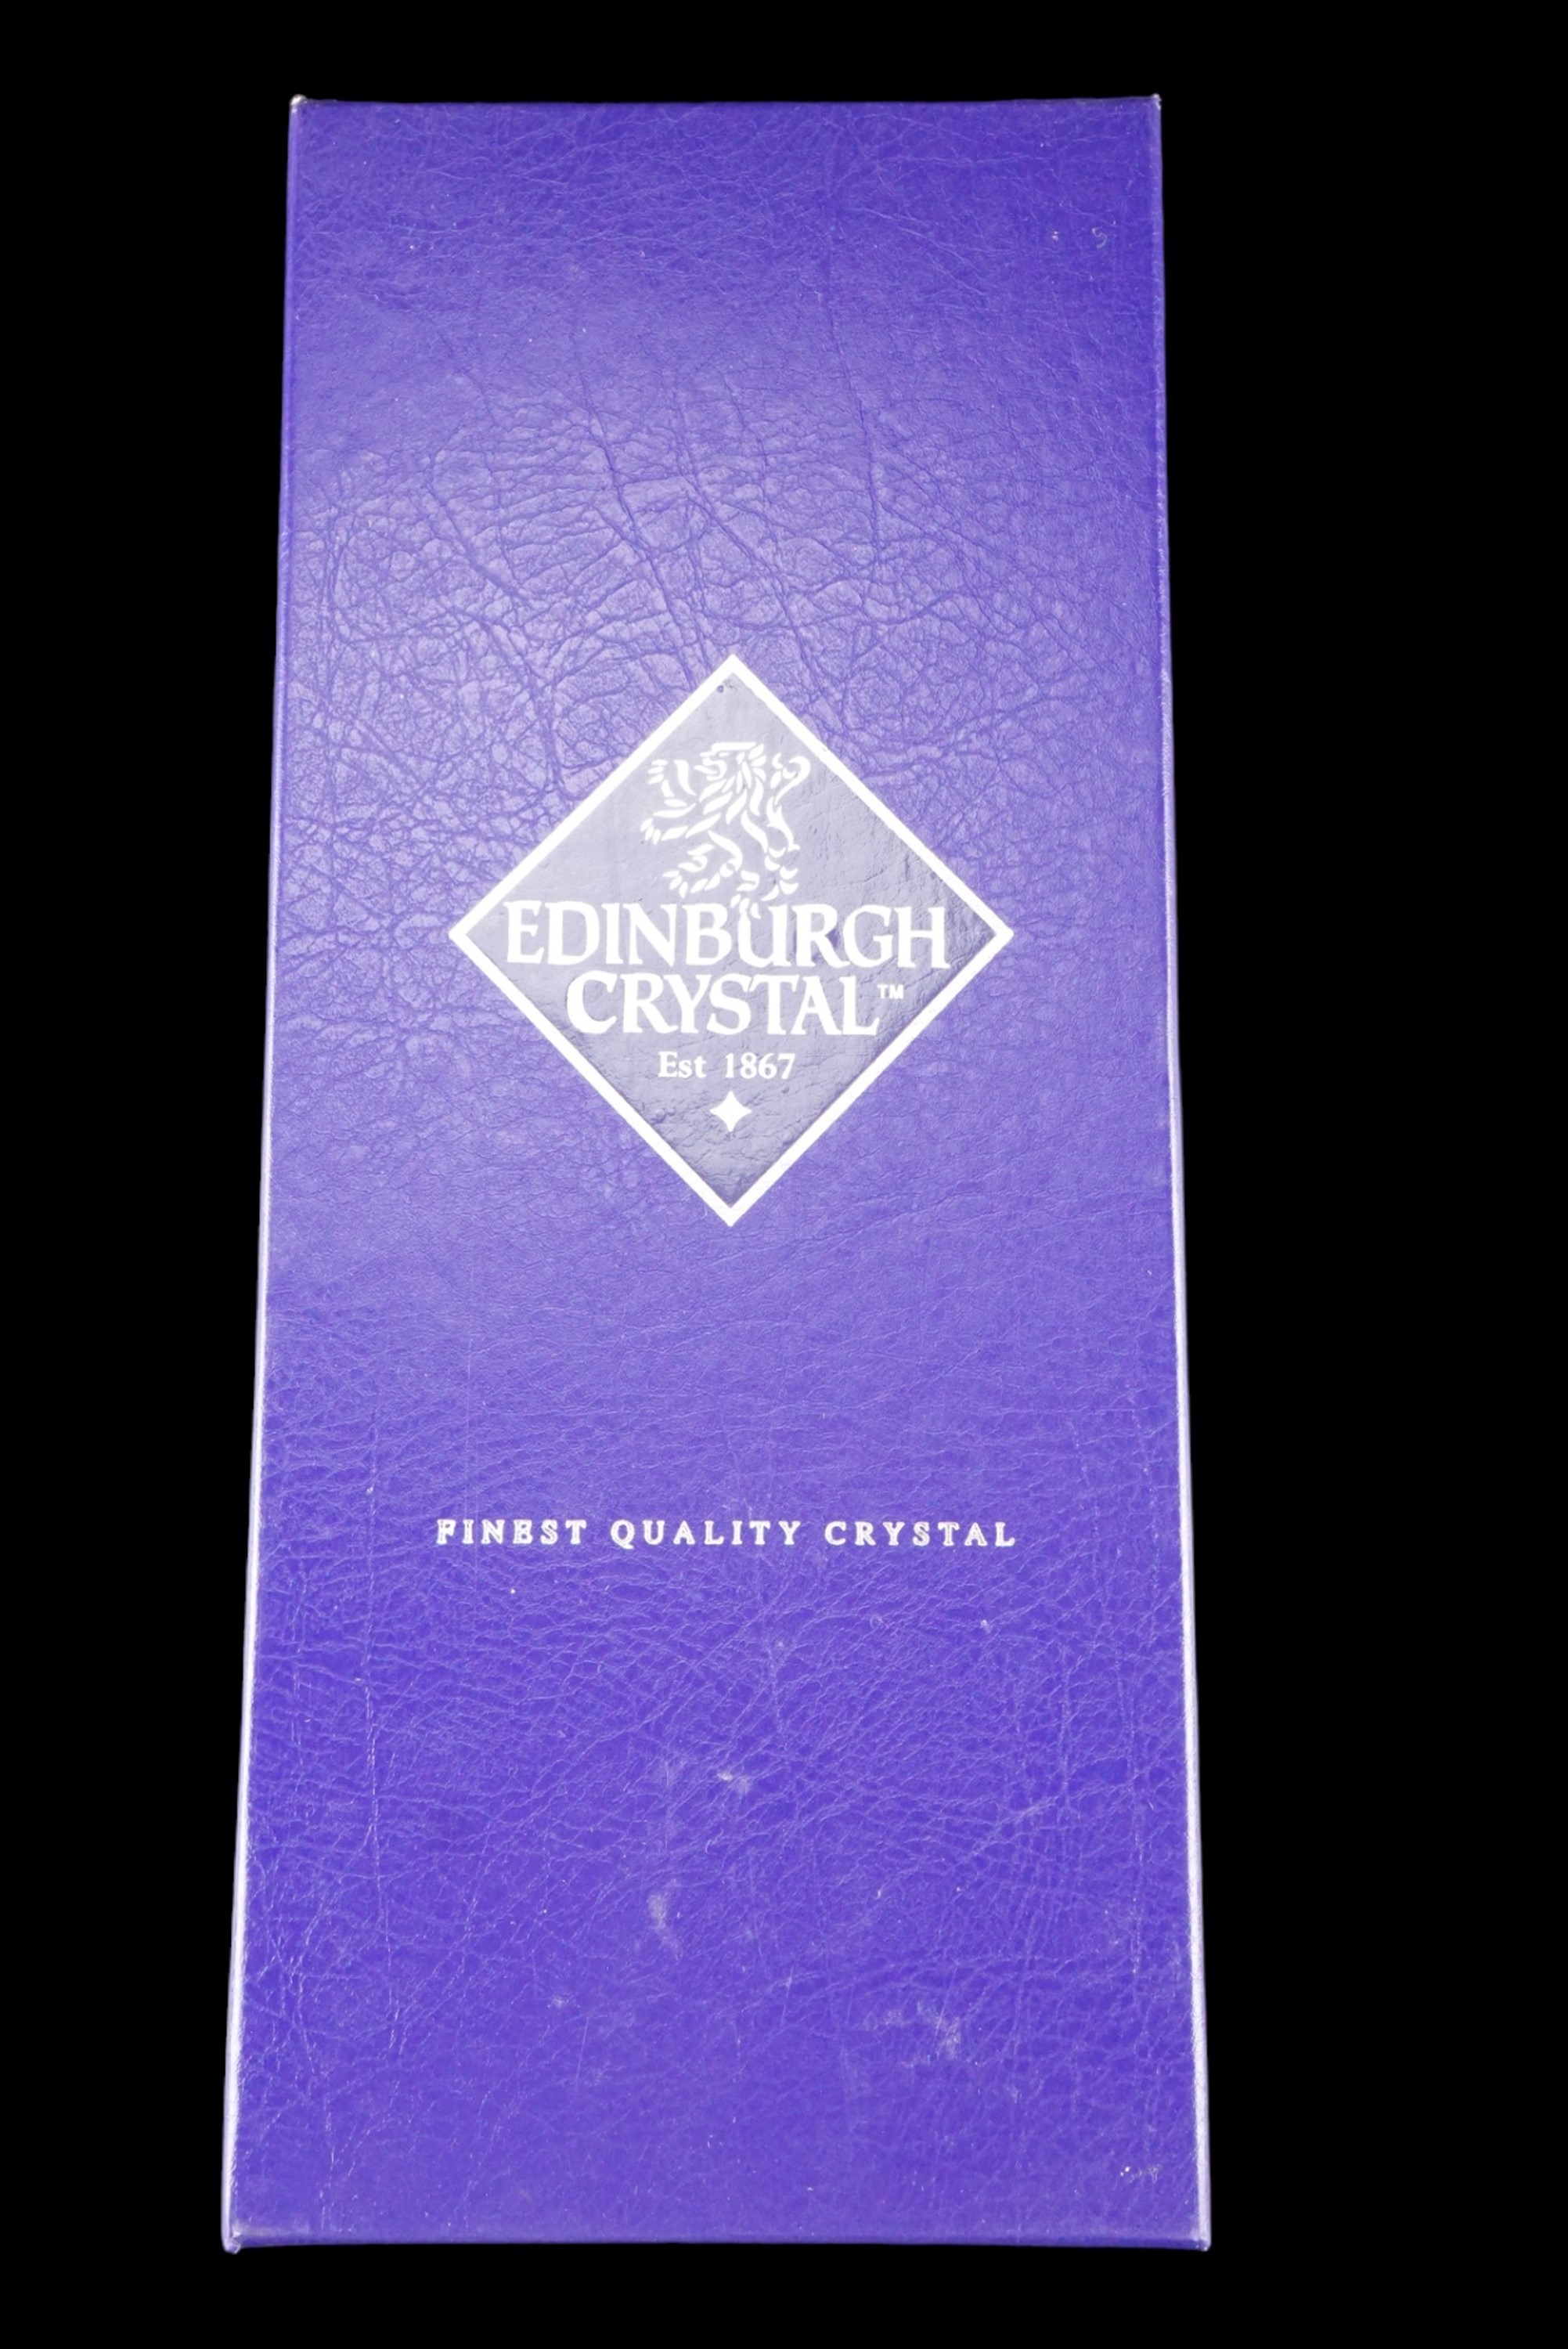 An Edinburgh Crystal spirit decanter - Image 2 of 3